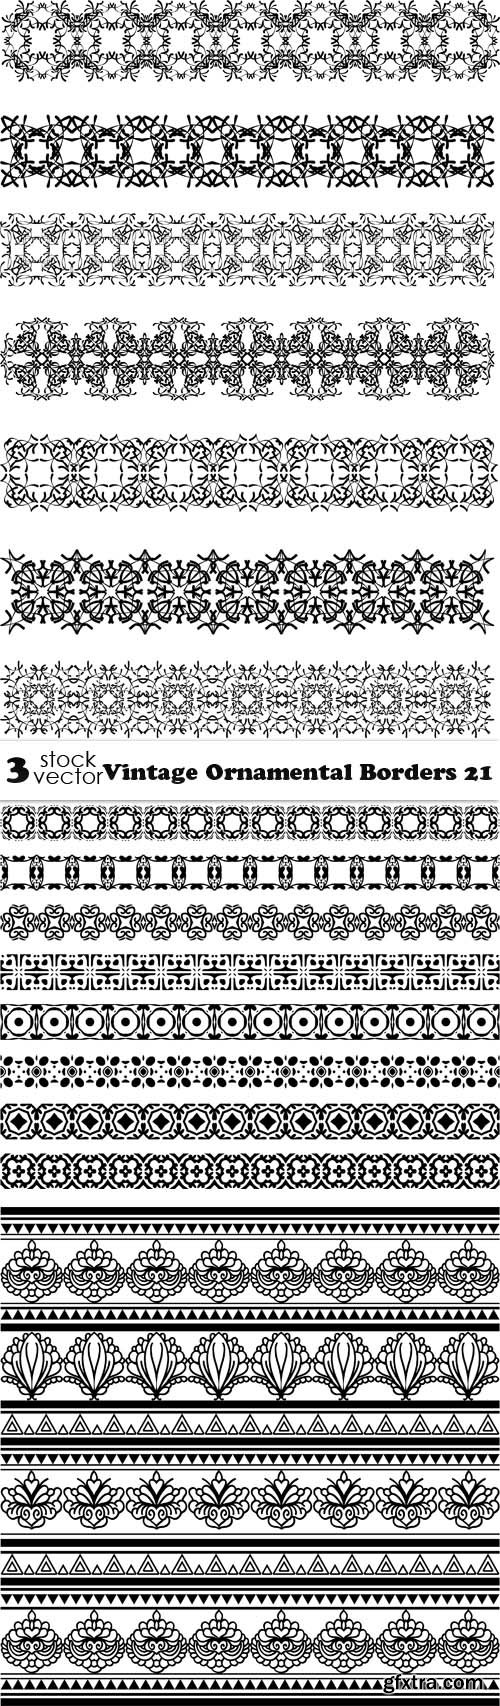 Vectors - Vintage Ornamental Borders 21